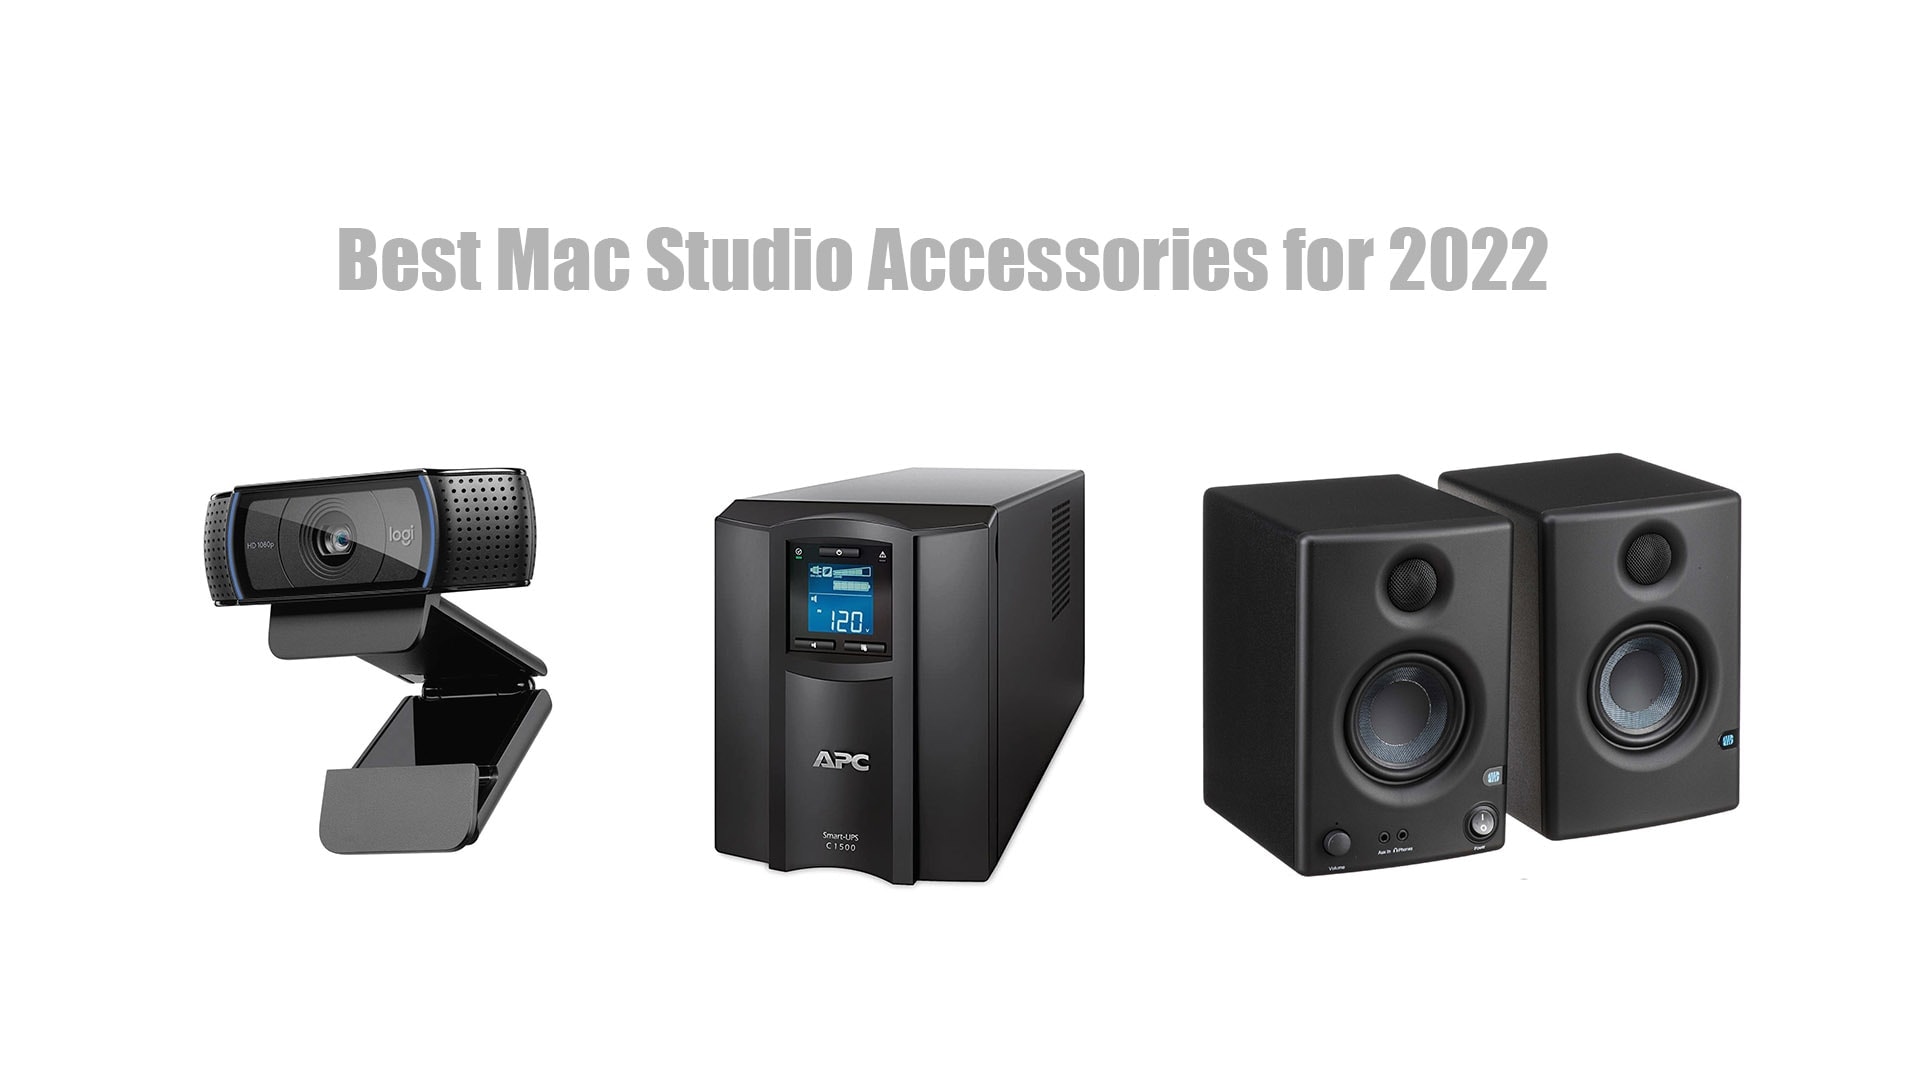 The Best Mac Studio Accessories for 2022